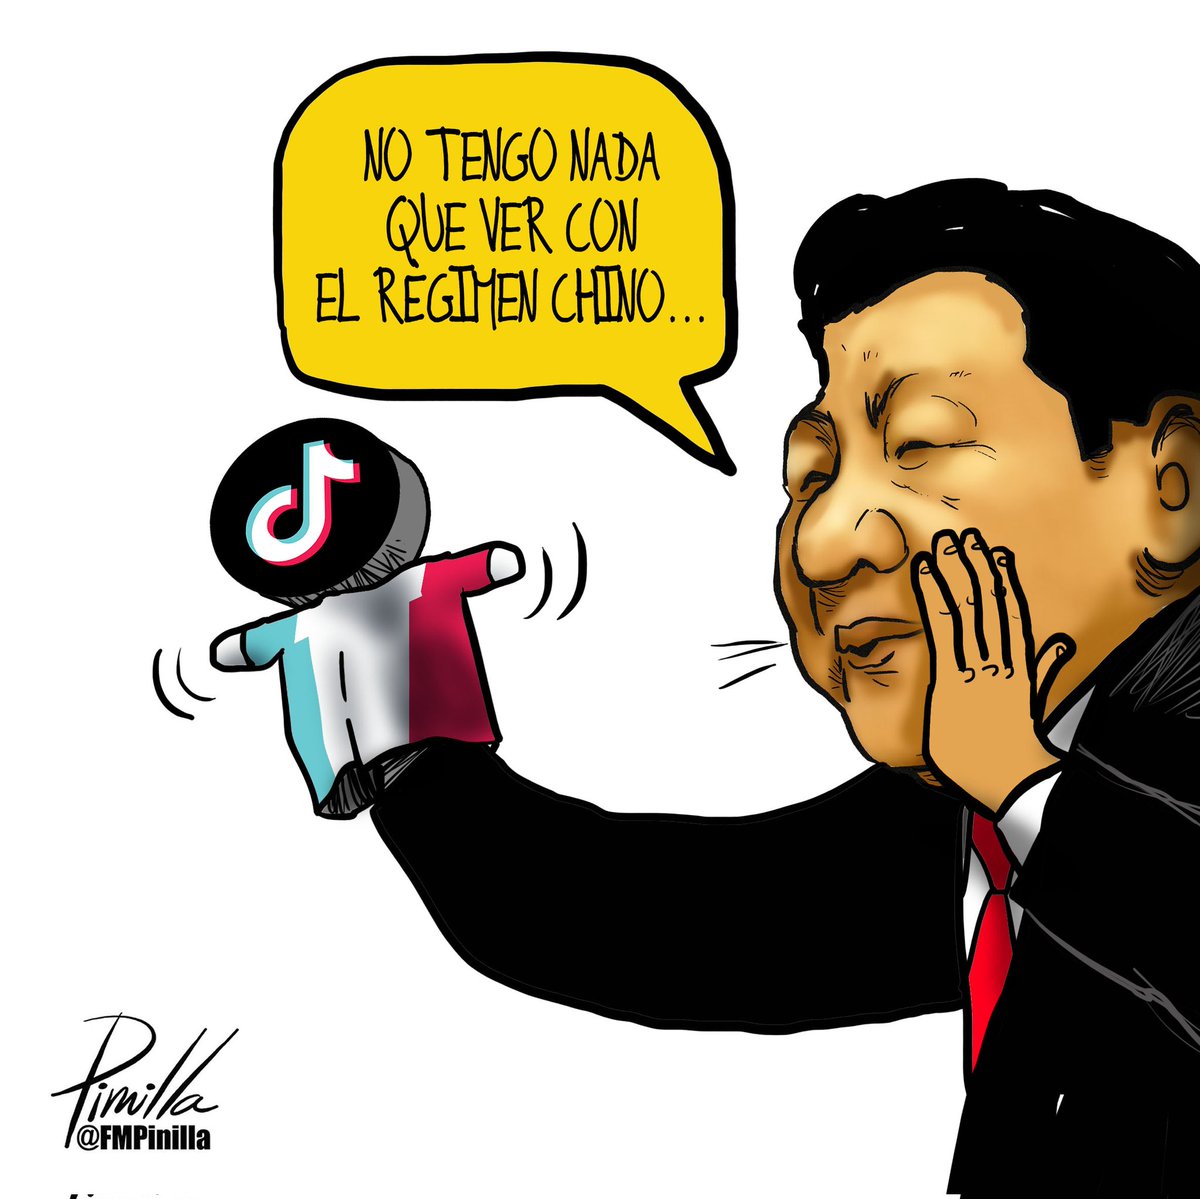 @tiktok y el régimen chino...
•
#dibujolibre para @dlasamericas_
•
#Caricatura #Cartoon #usa #eeuu🇺🇸 #eeuuu #politicalcartoon #china #tiktok